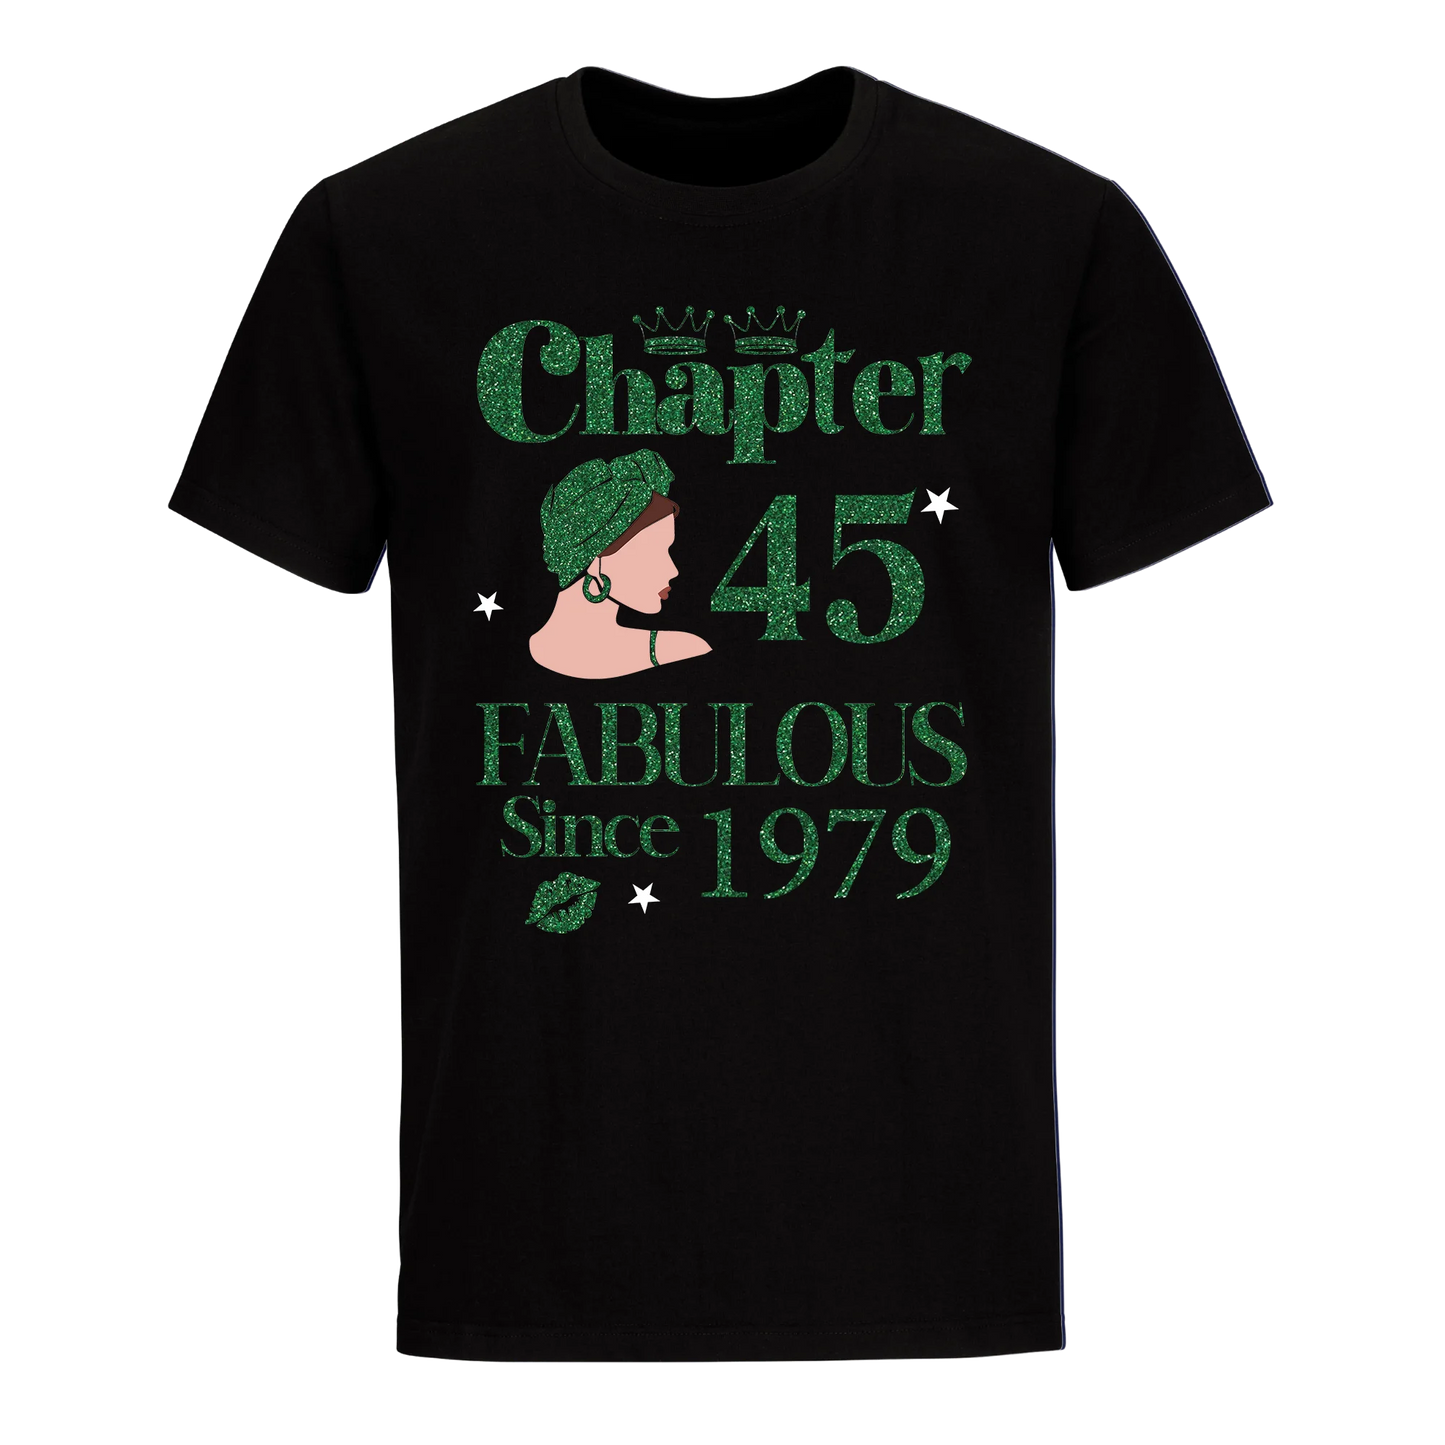 CHAPTER 45TH FABULOUS SINCE 1979 GREEN UNISEX SHIRT